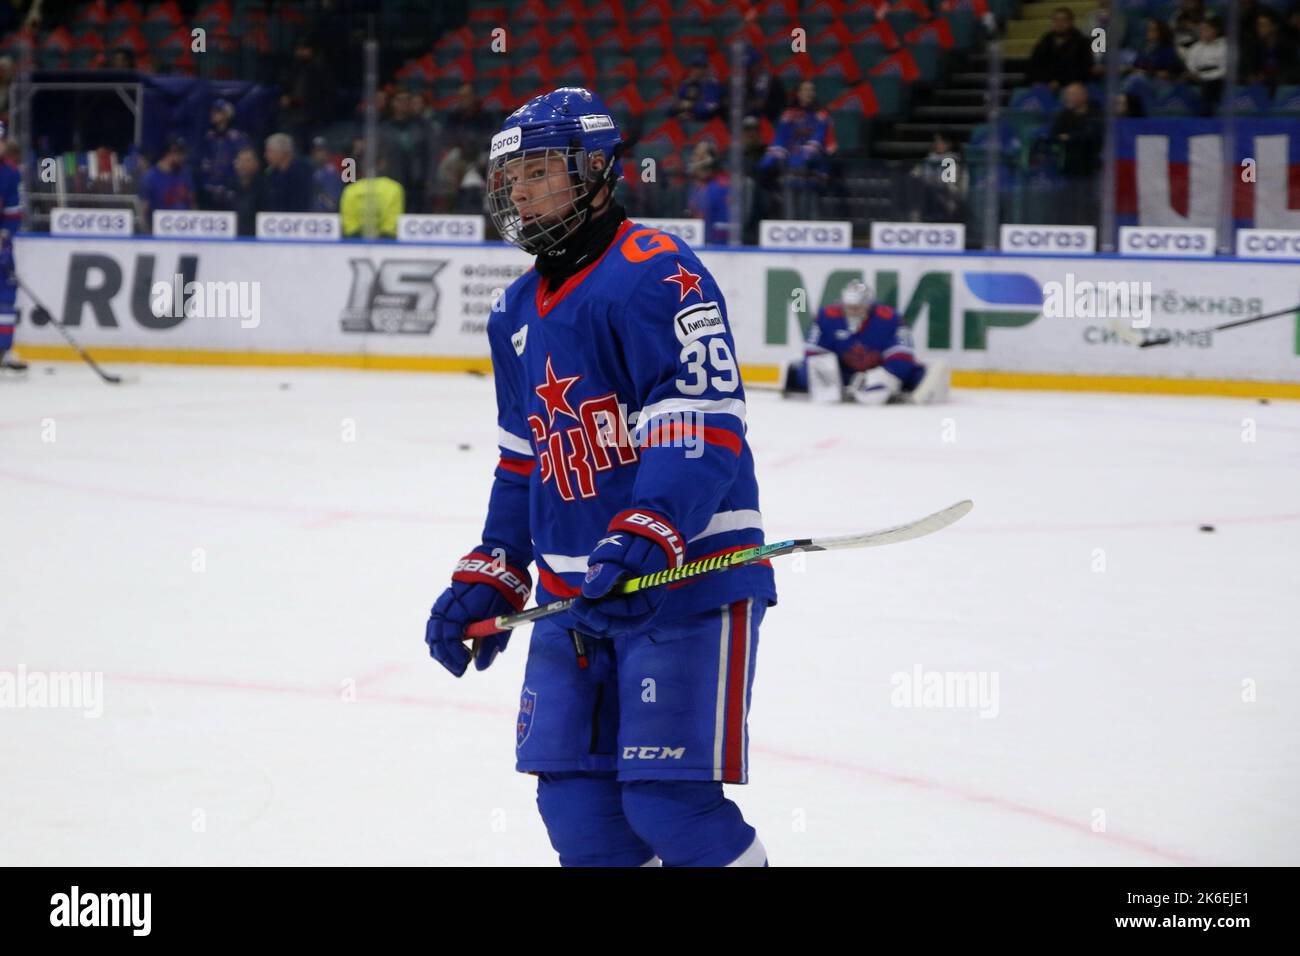 SKA Ice Hockey Club on X: SKA system forward Matvei Michkov has